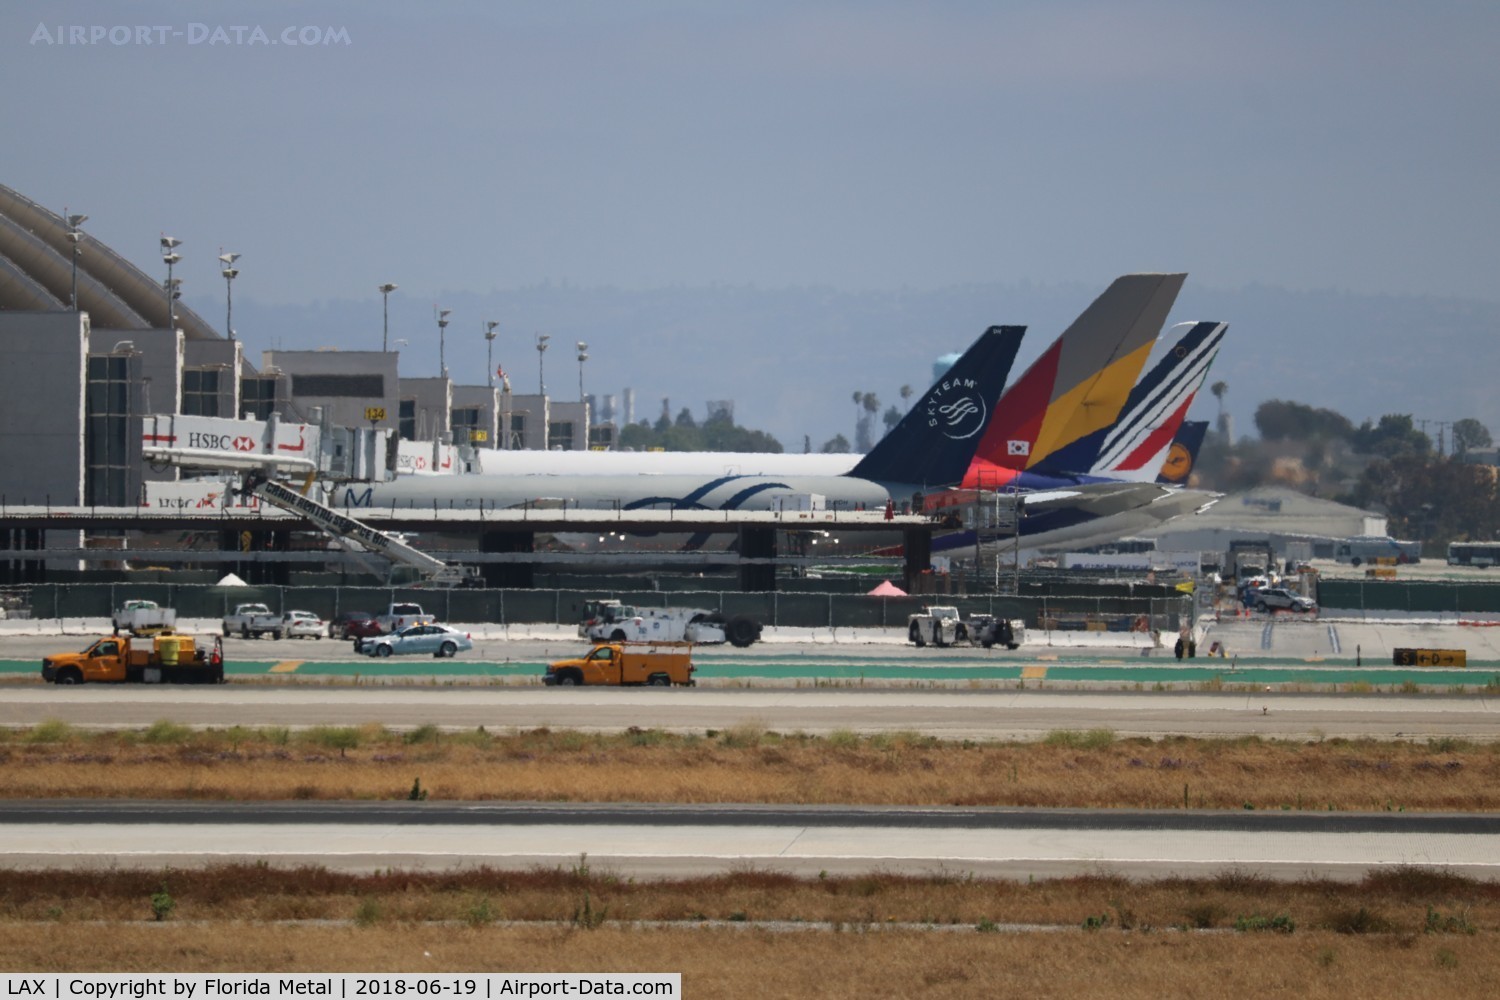 Los Angeles International Airport (LAX) - Bradley Terminal